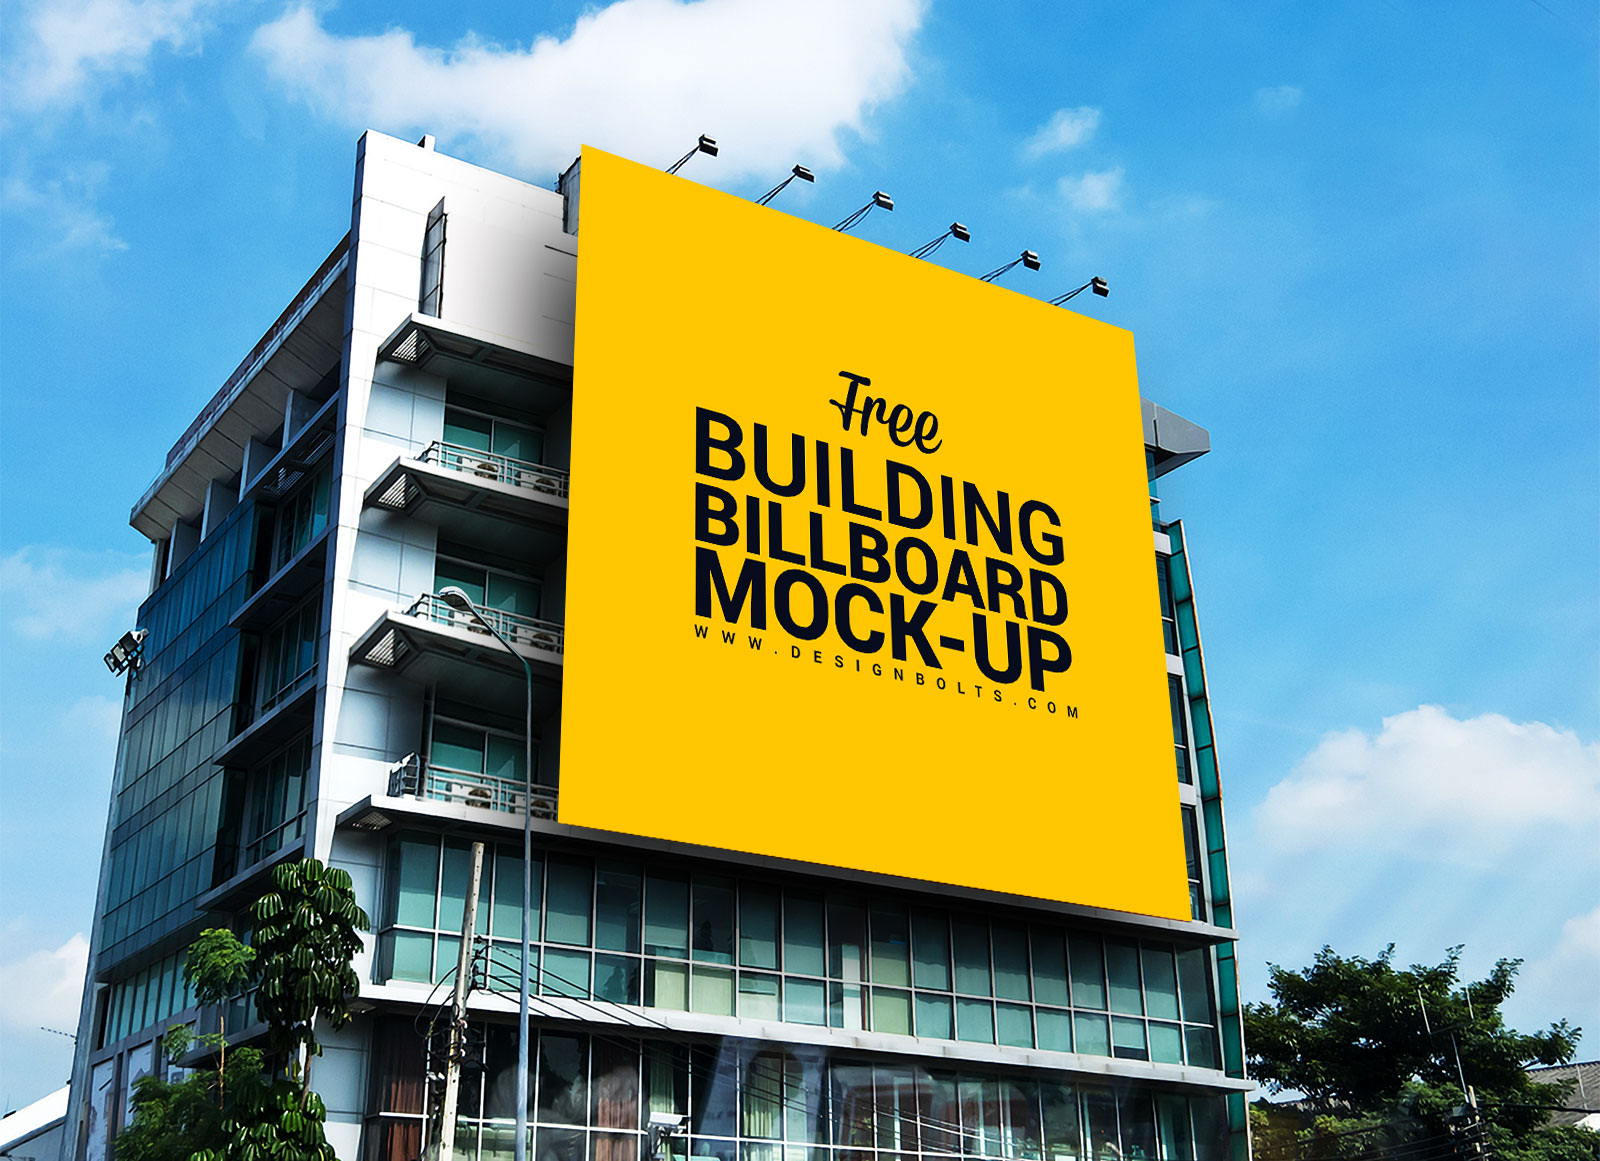 Free Outdoor Advertisement Building Branding Mockup PSD - Good Mockups